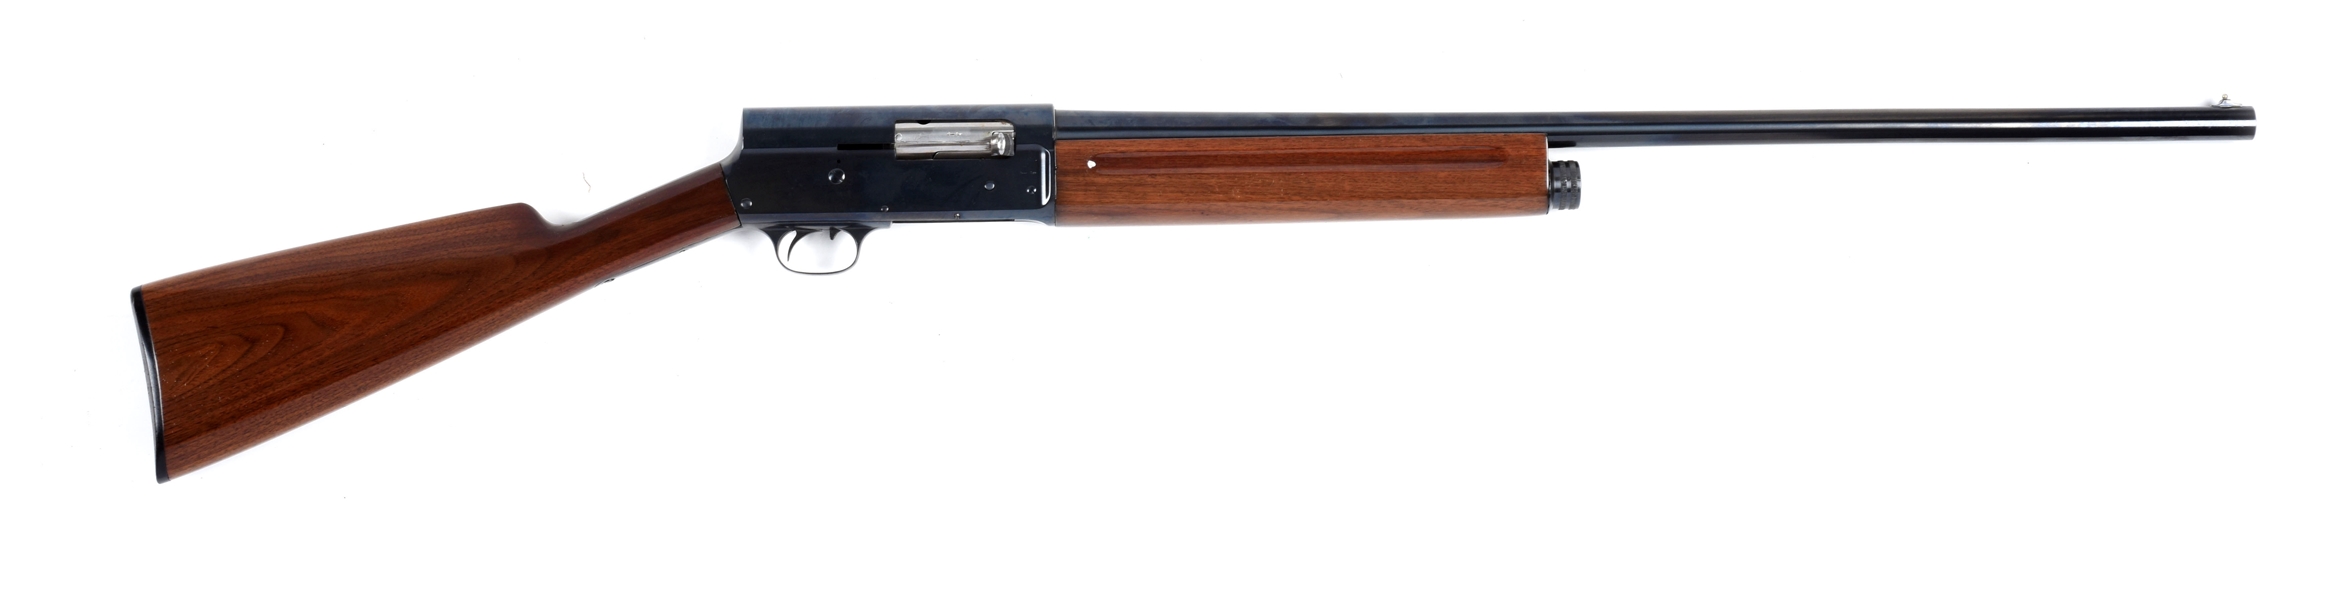 (M) EARLY BELGIAN FN BROWNING A5 COCKERILL STEEL SEMI-AUTOMATIC SHOTGUN.